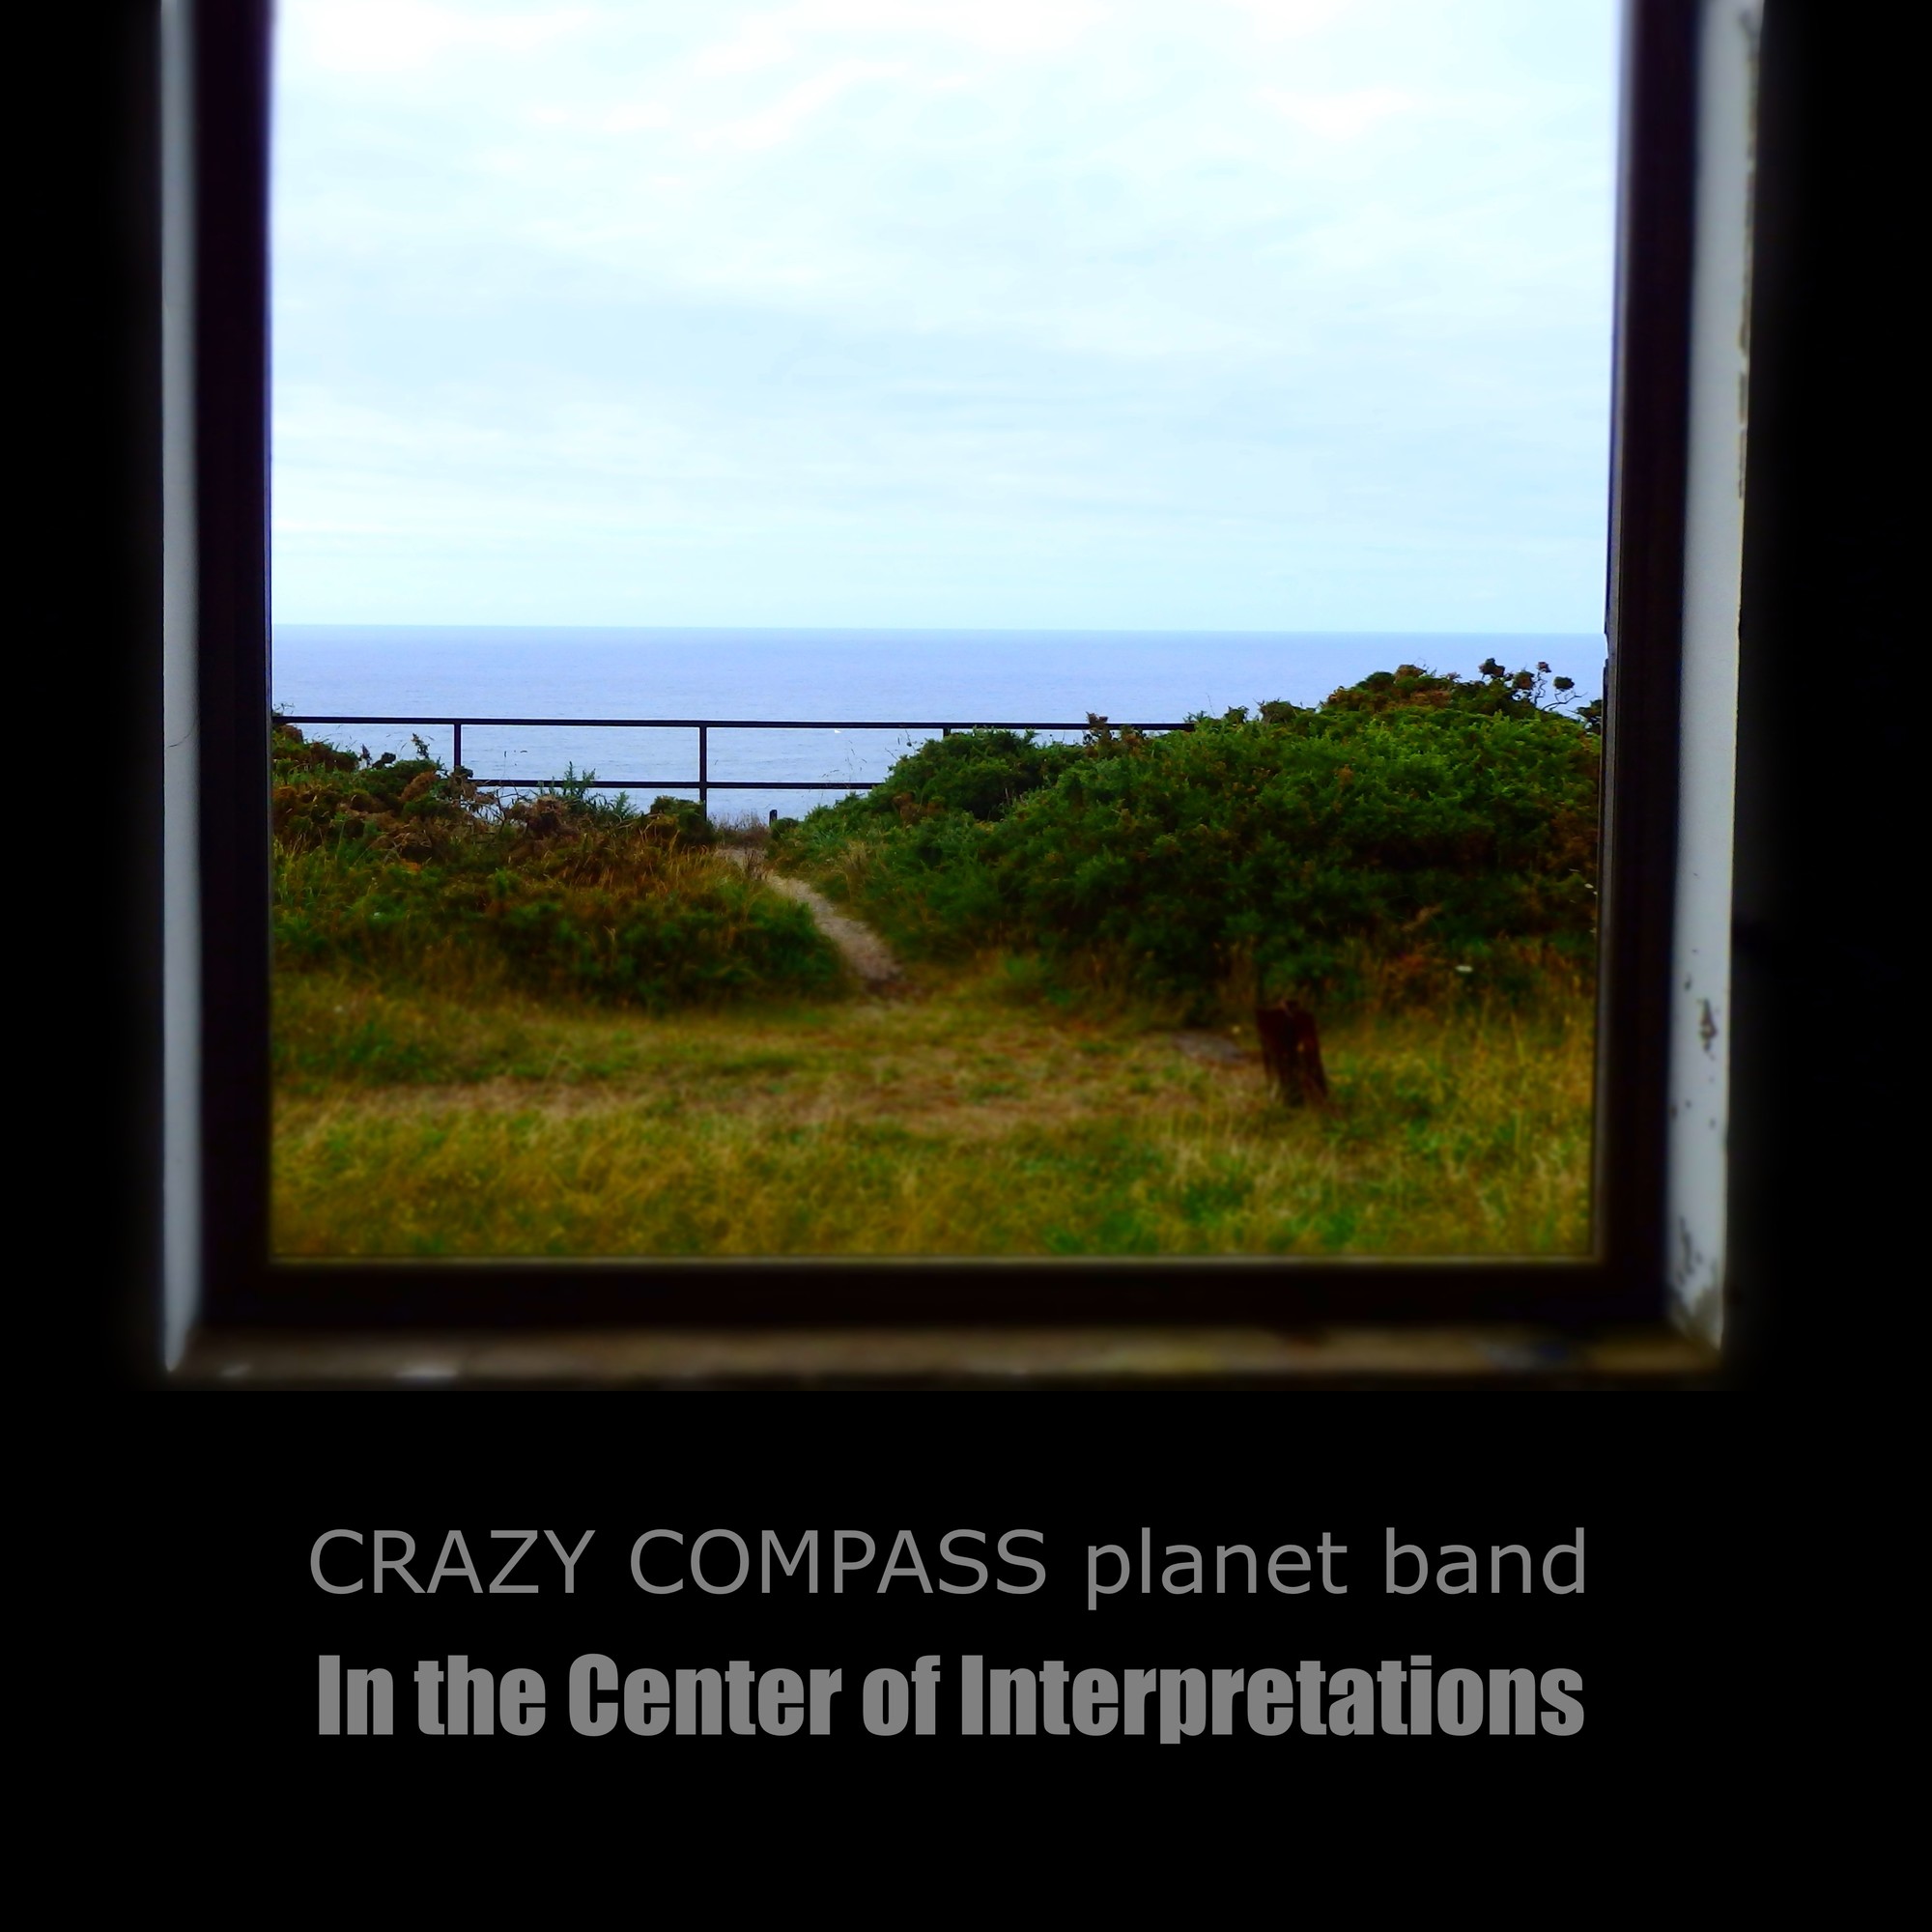 CRAZY COMPASS planet band.